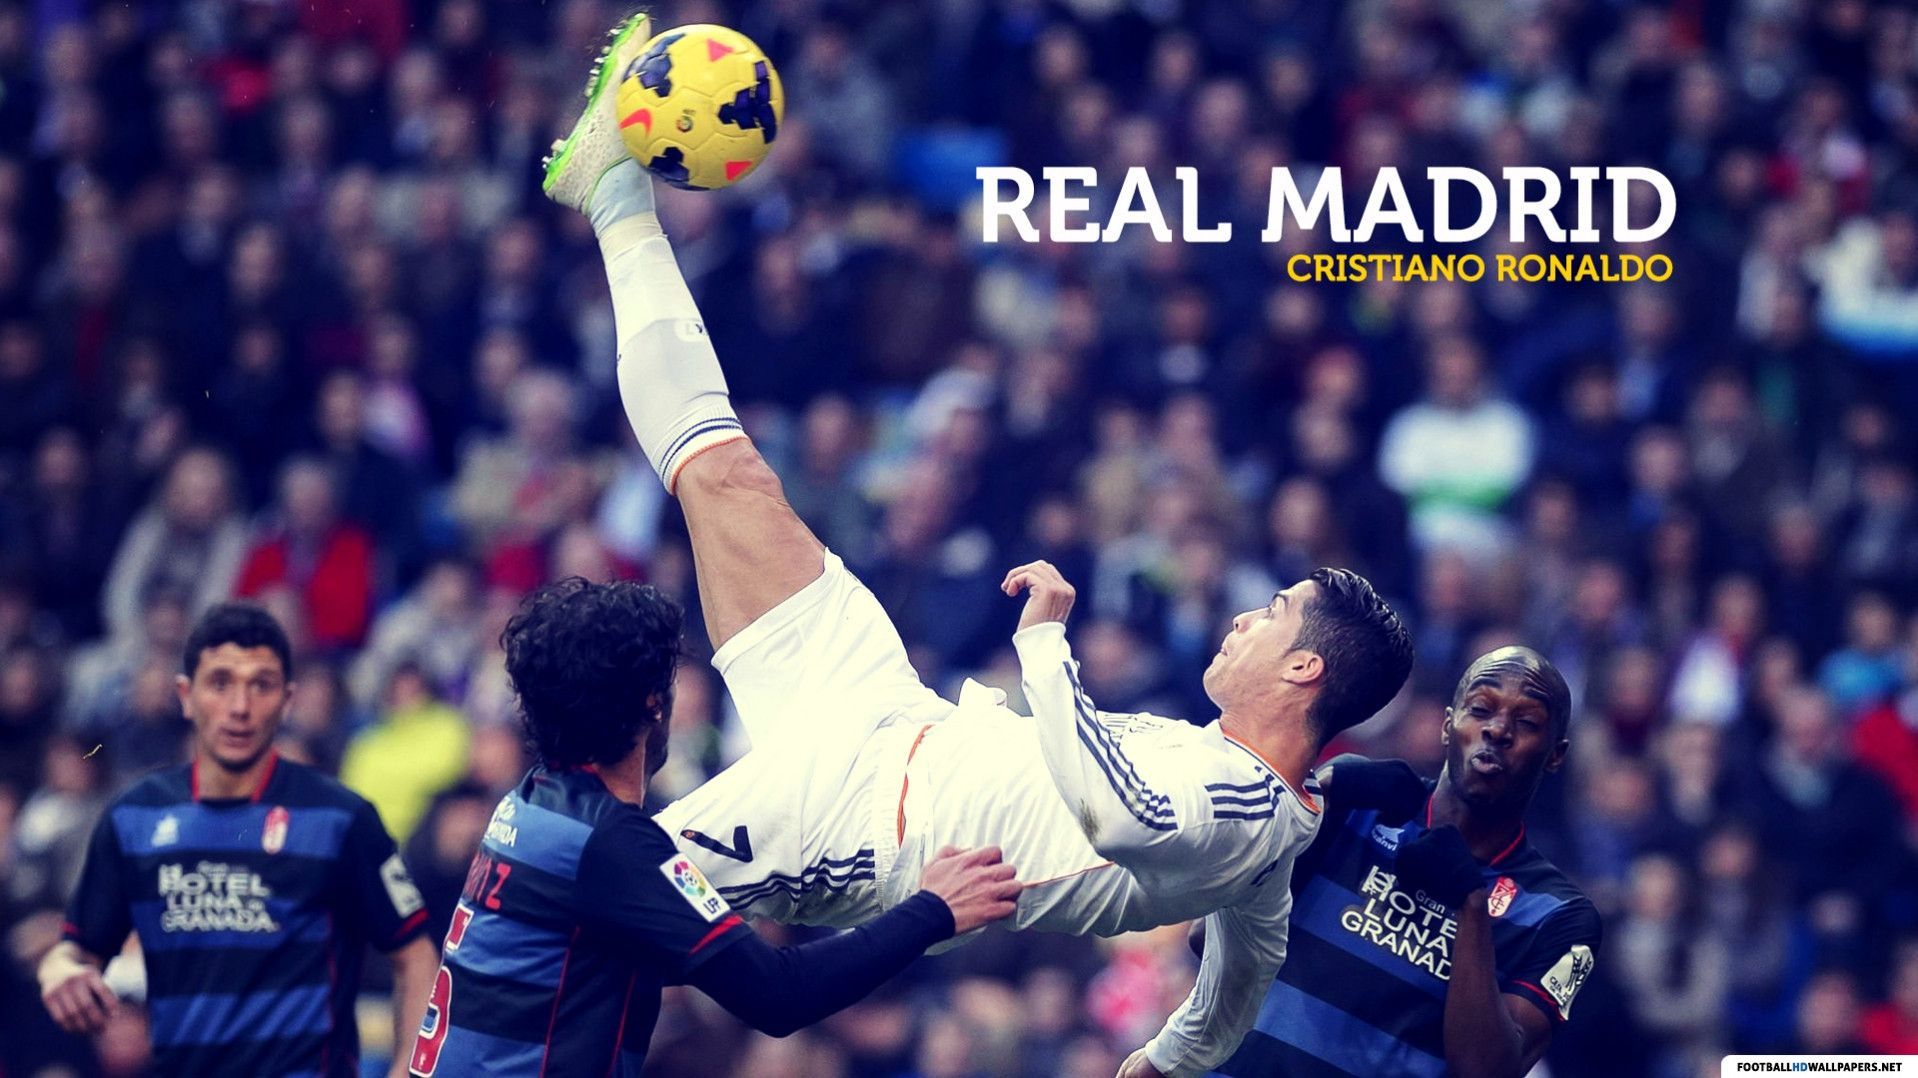 Ultimate Cristiano Ronaldo Real Madrid Hd Football Wallpapers Jpg